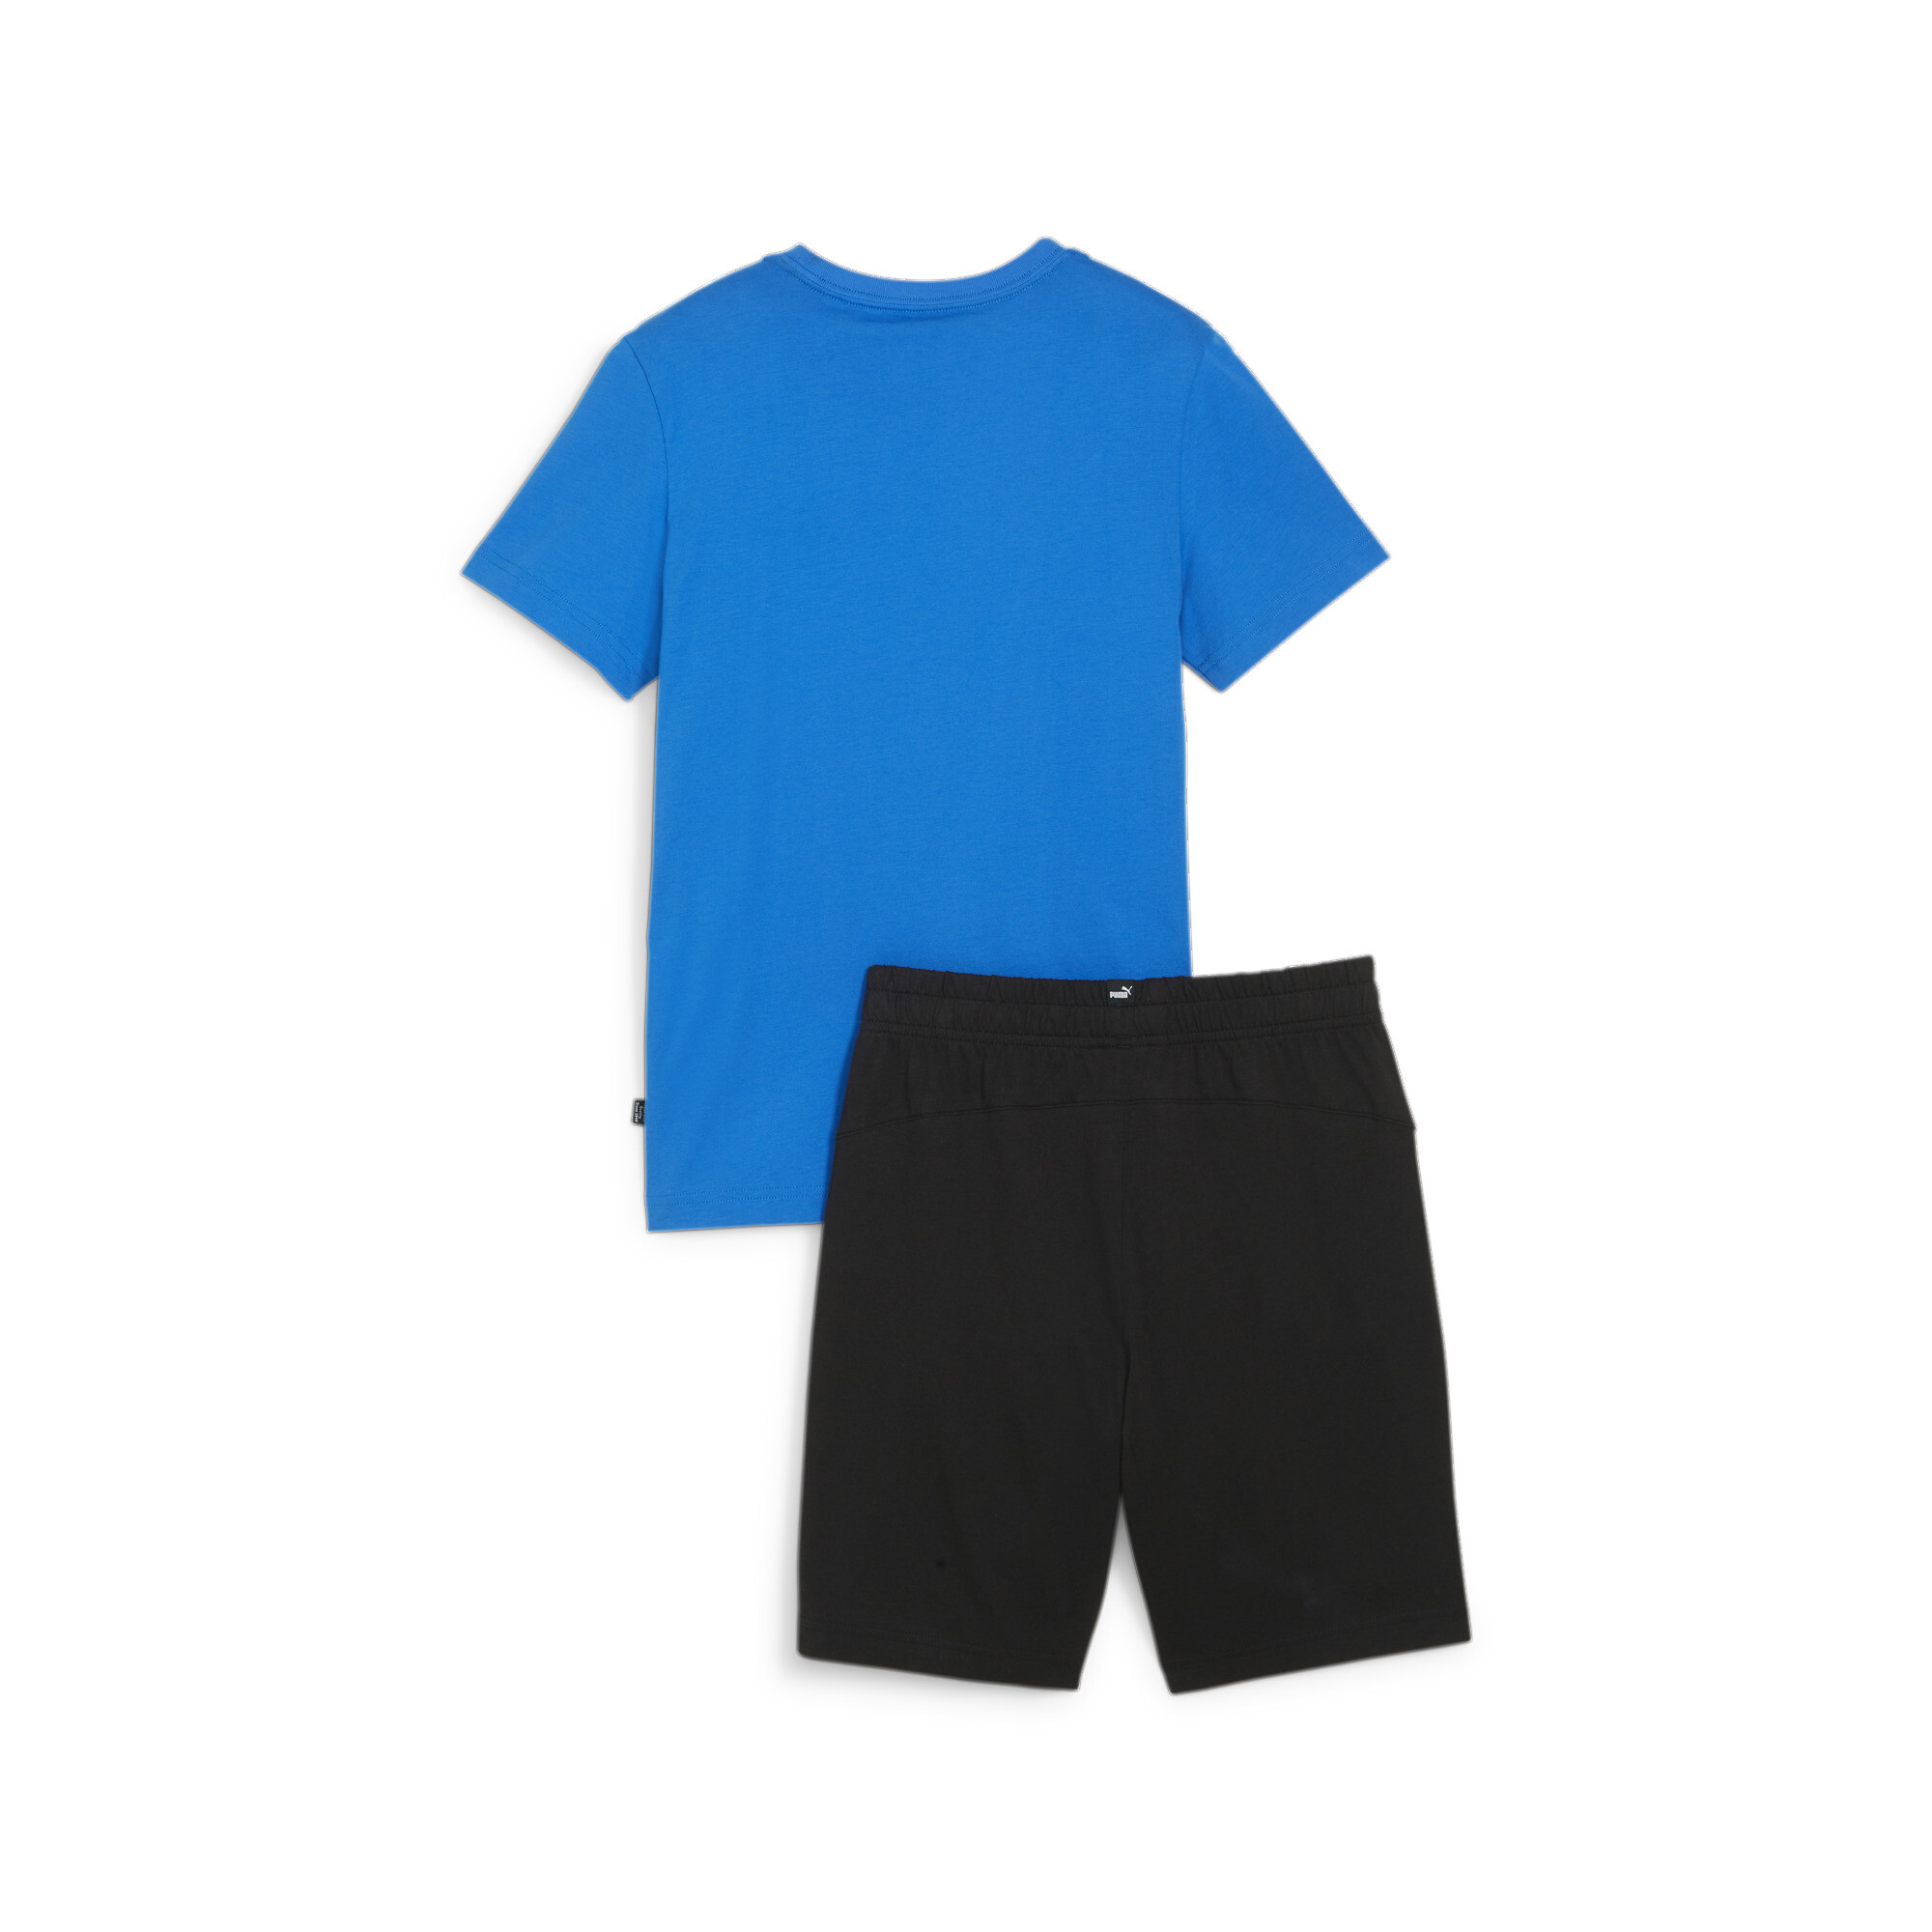 Men's Puma Jersey Youth Shorts Set, Blue, Size 13-14Y, Clothing